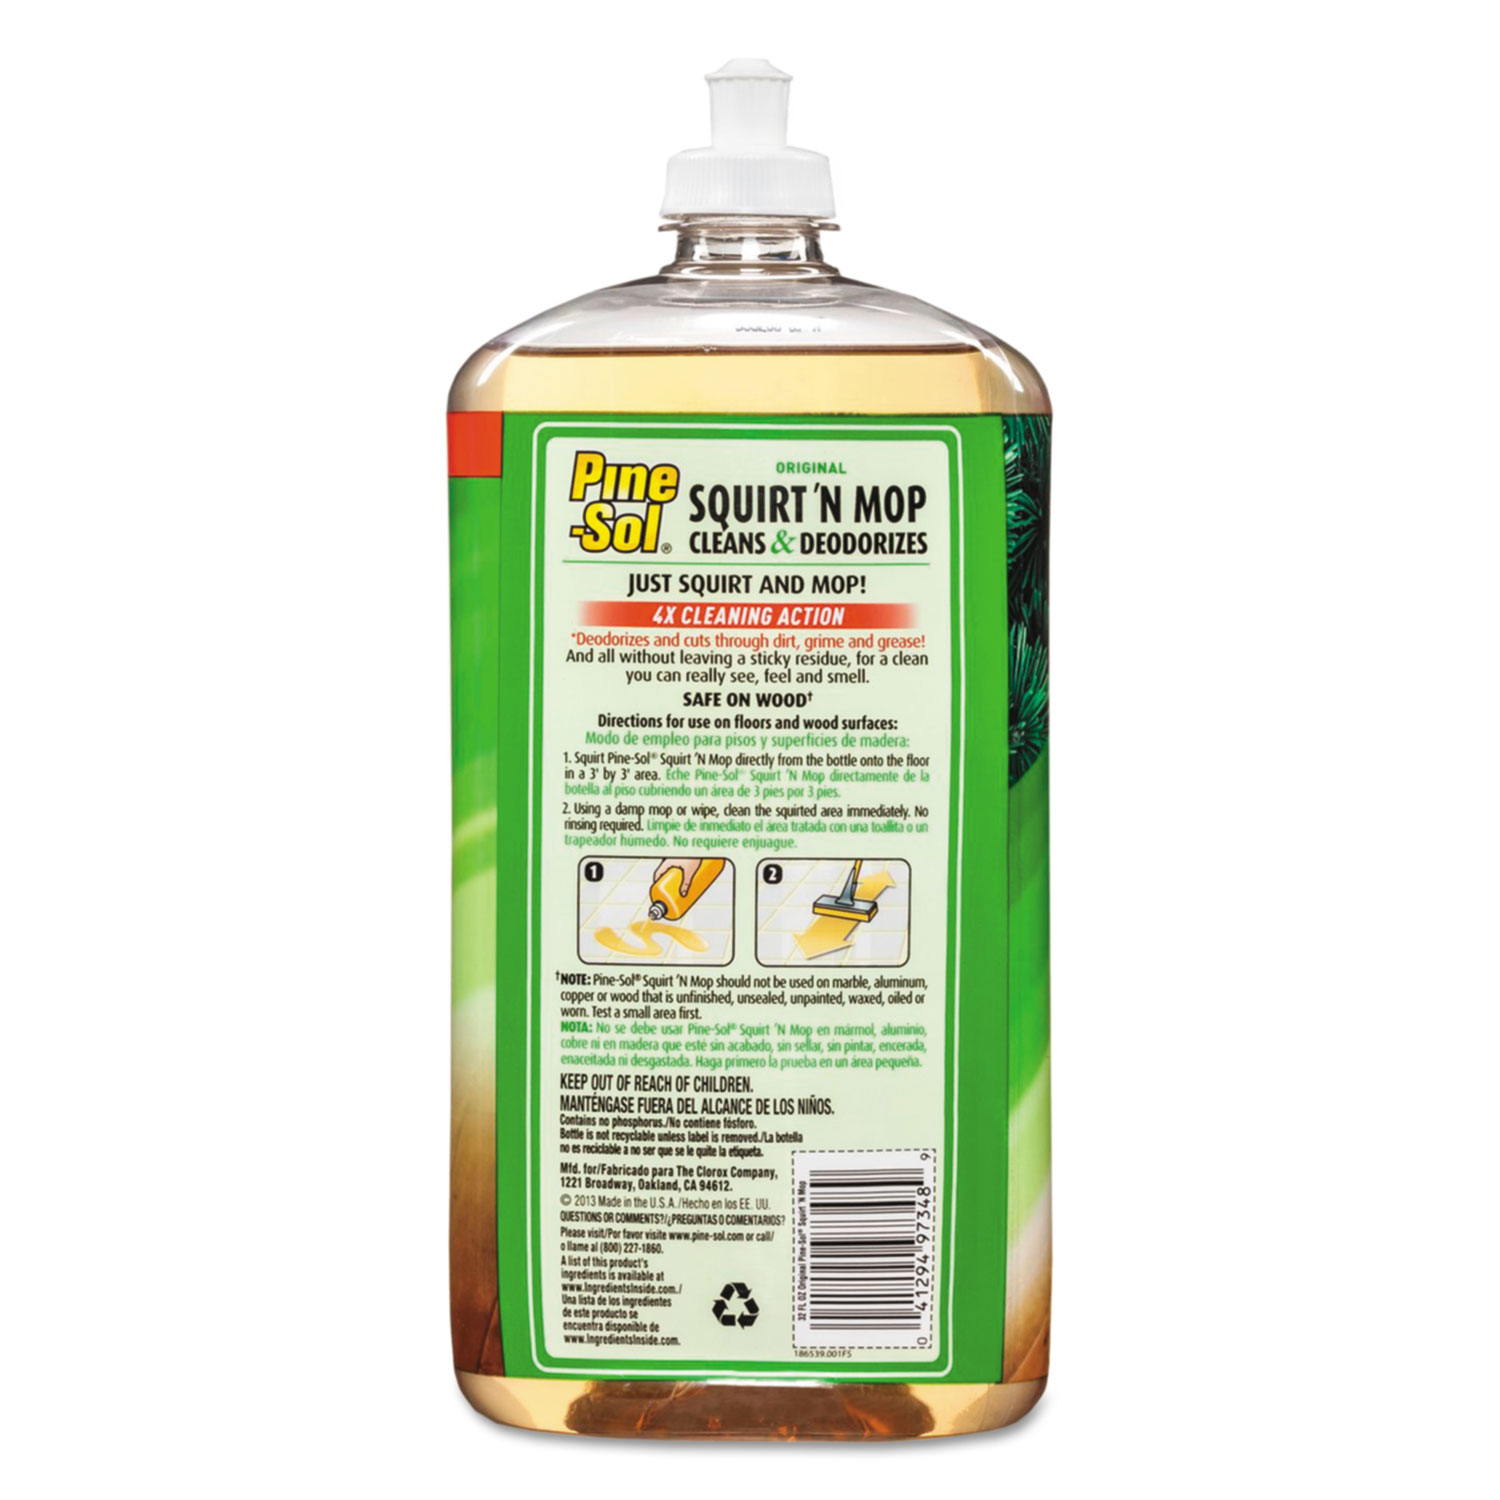 Squirt n Mop Multi-Surface Floor Cleaner, 32 oz Bottle, Original Scent